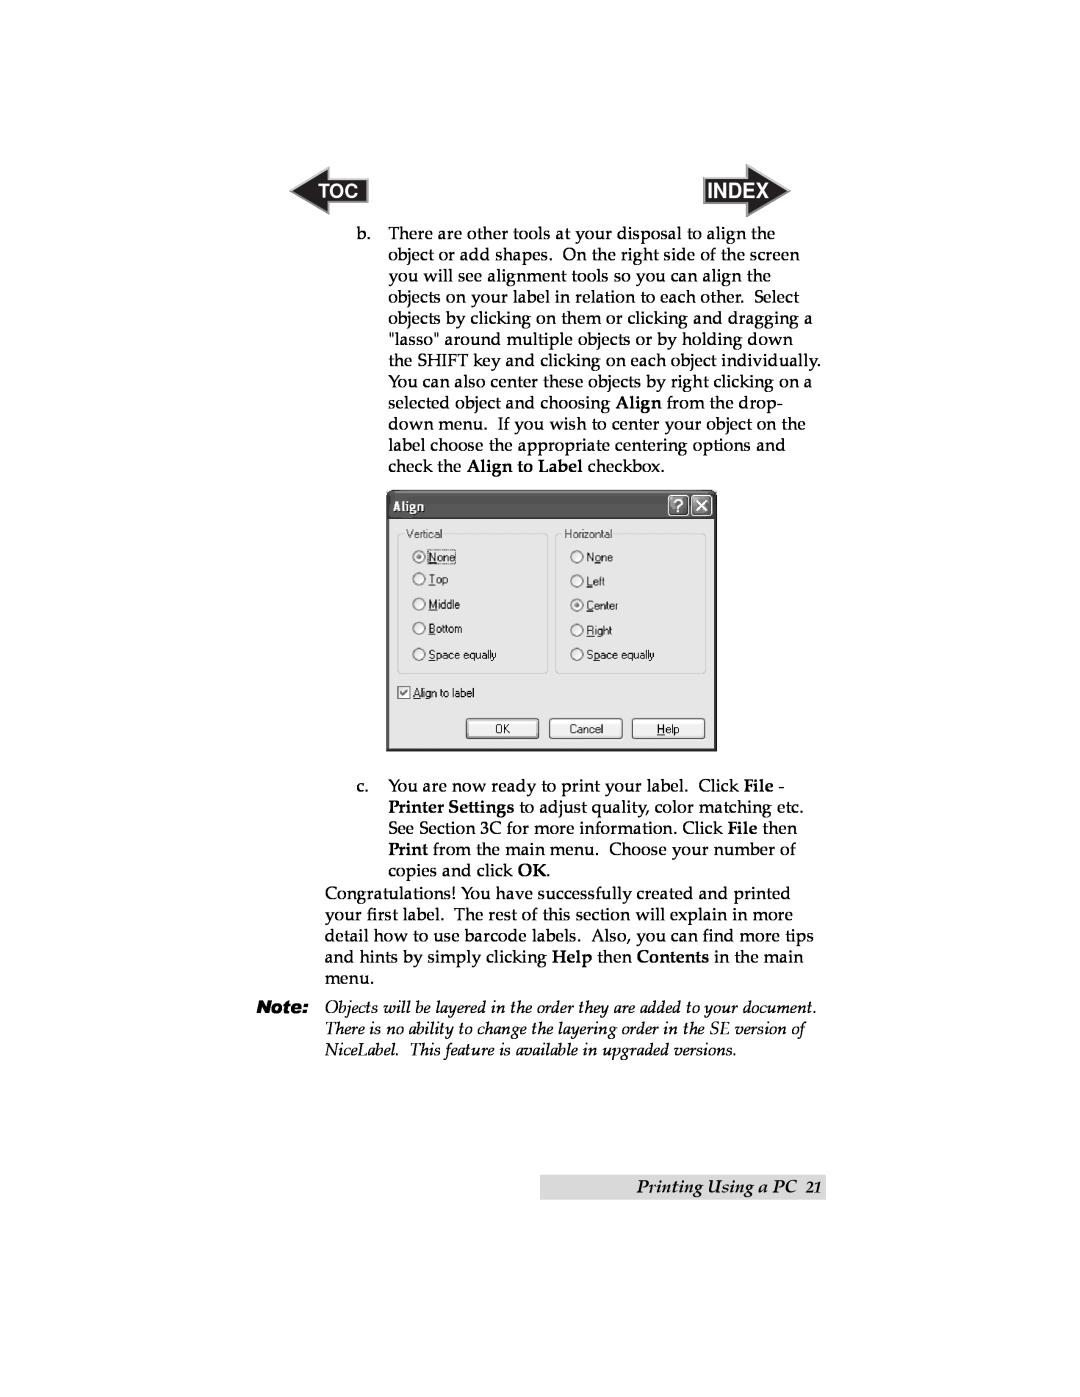 Primera Technology LX400 user manual Index, Printing Using a PC 